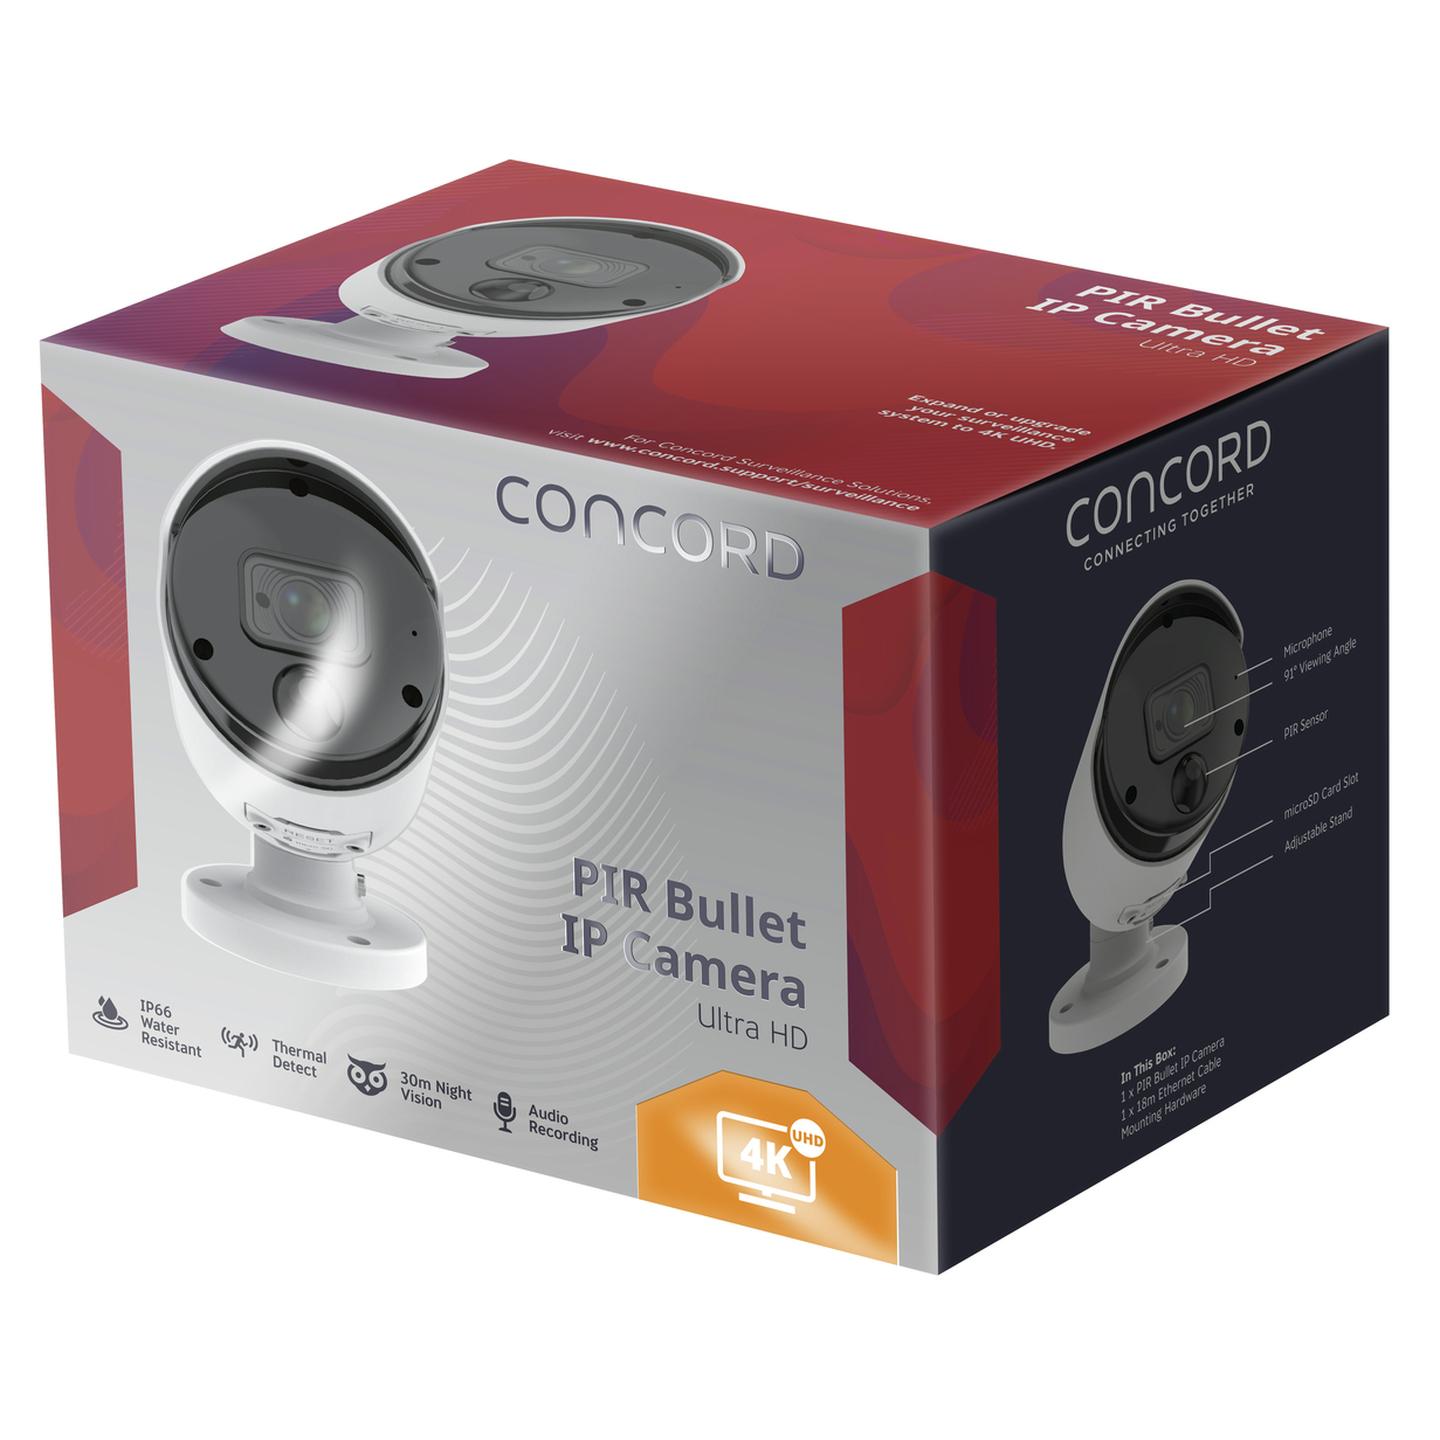 Concord 4K PIR Bullet IP Camera